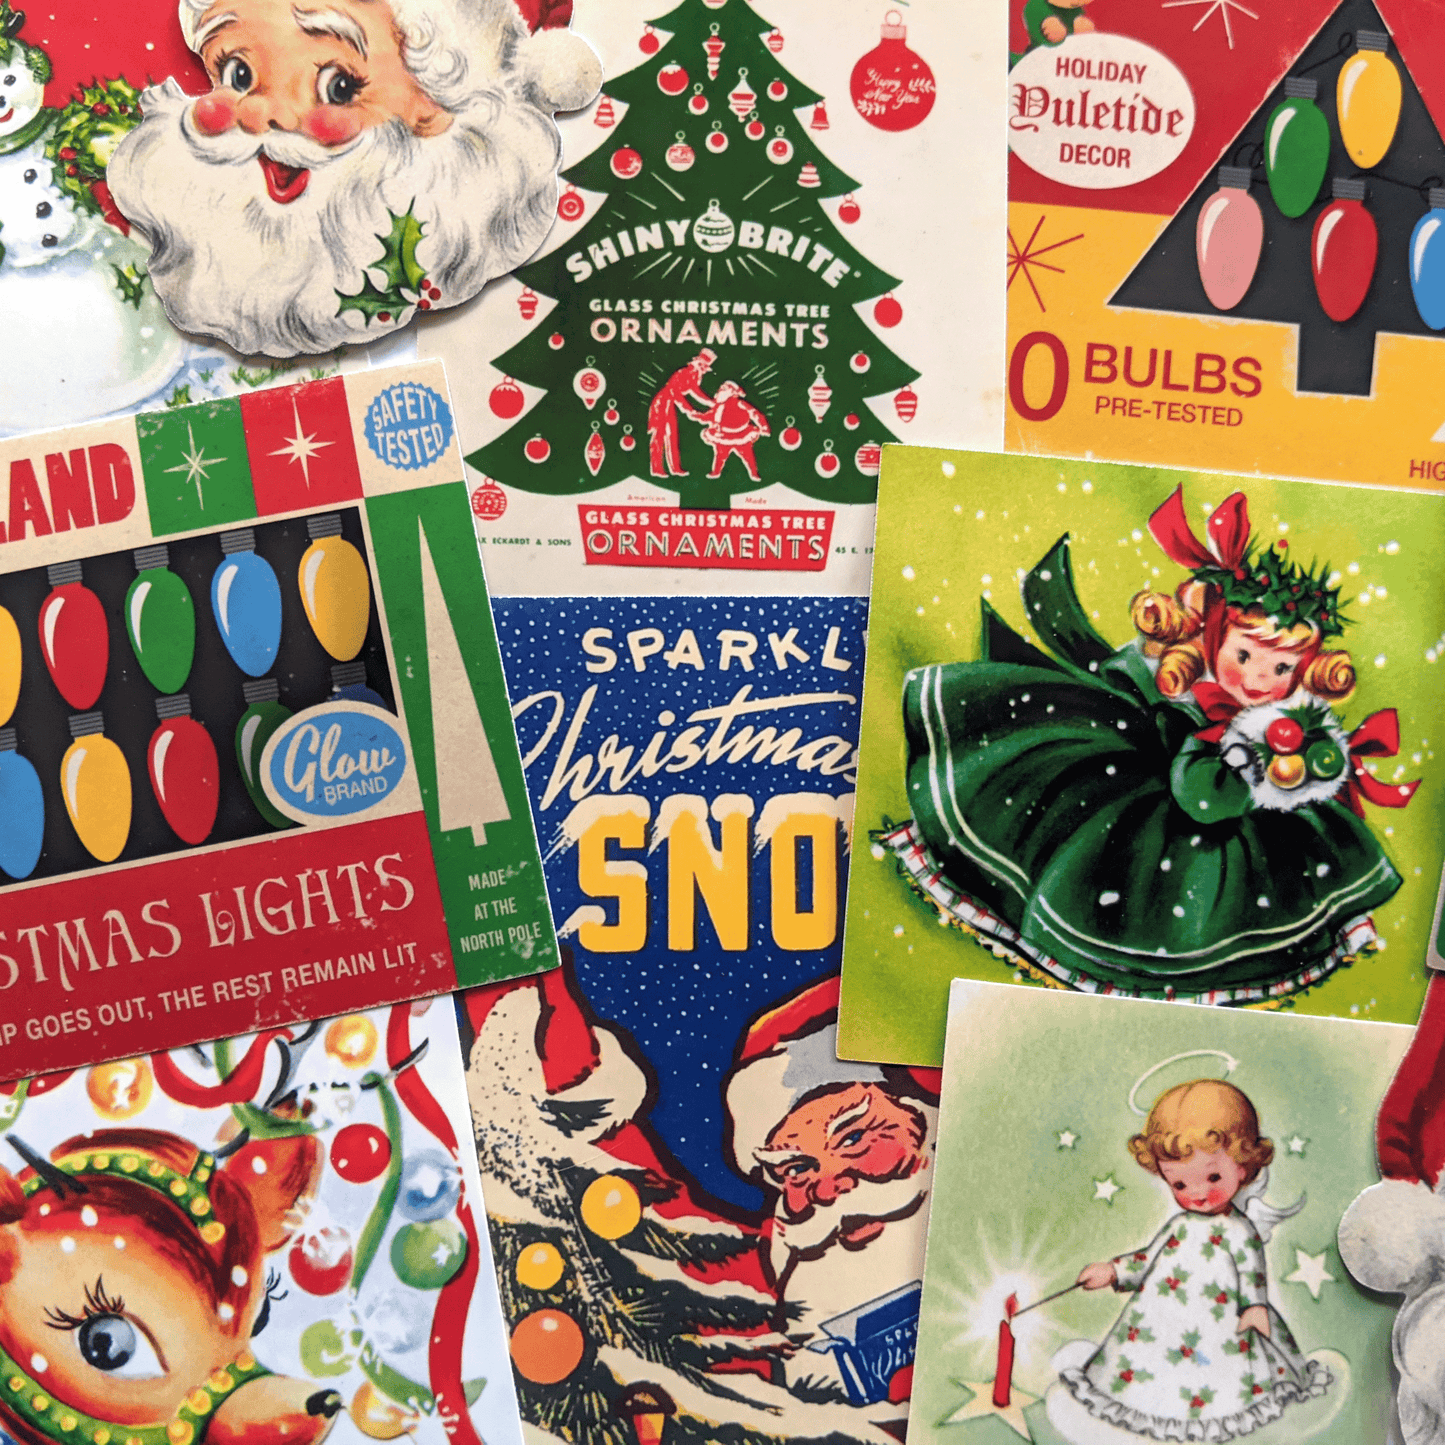 Vintage Christmas Tree Sticker Pack Graphic by Orange Brush Studio